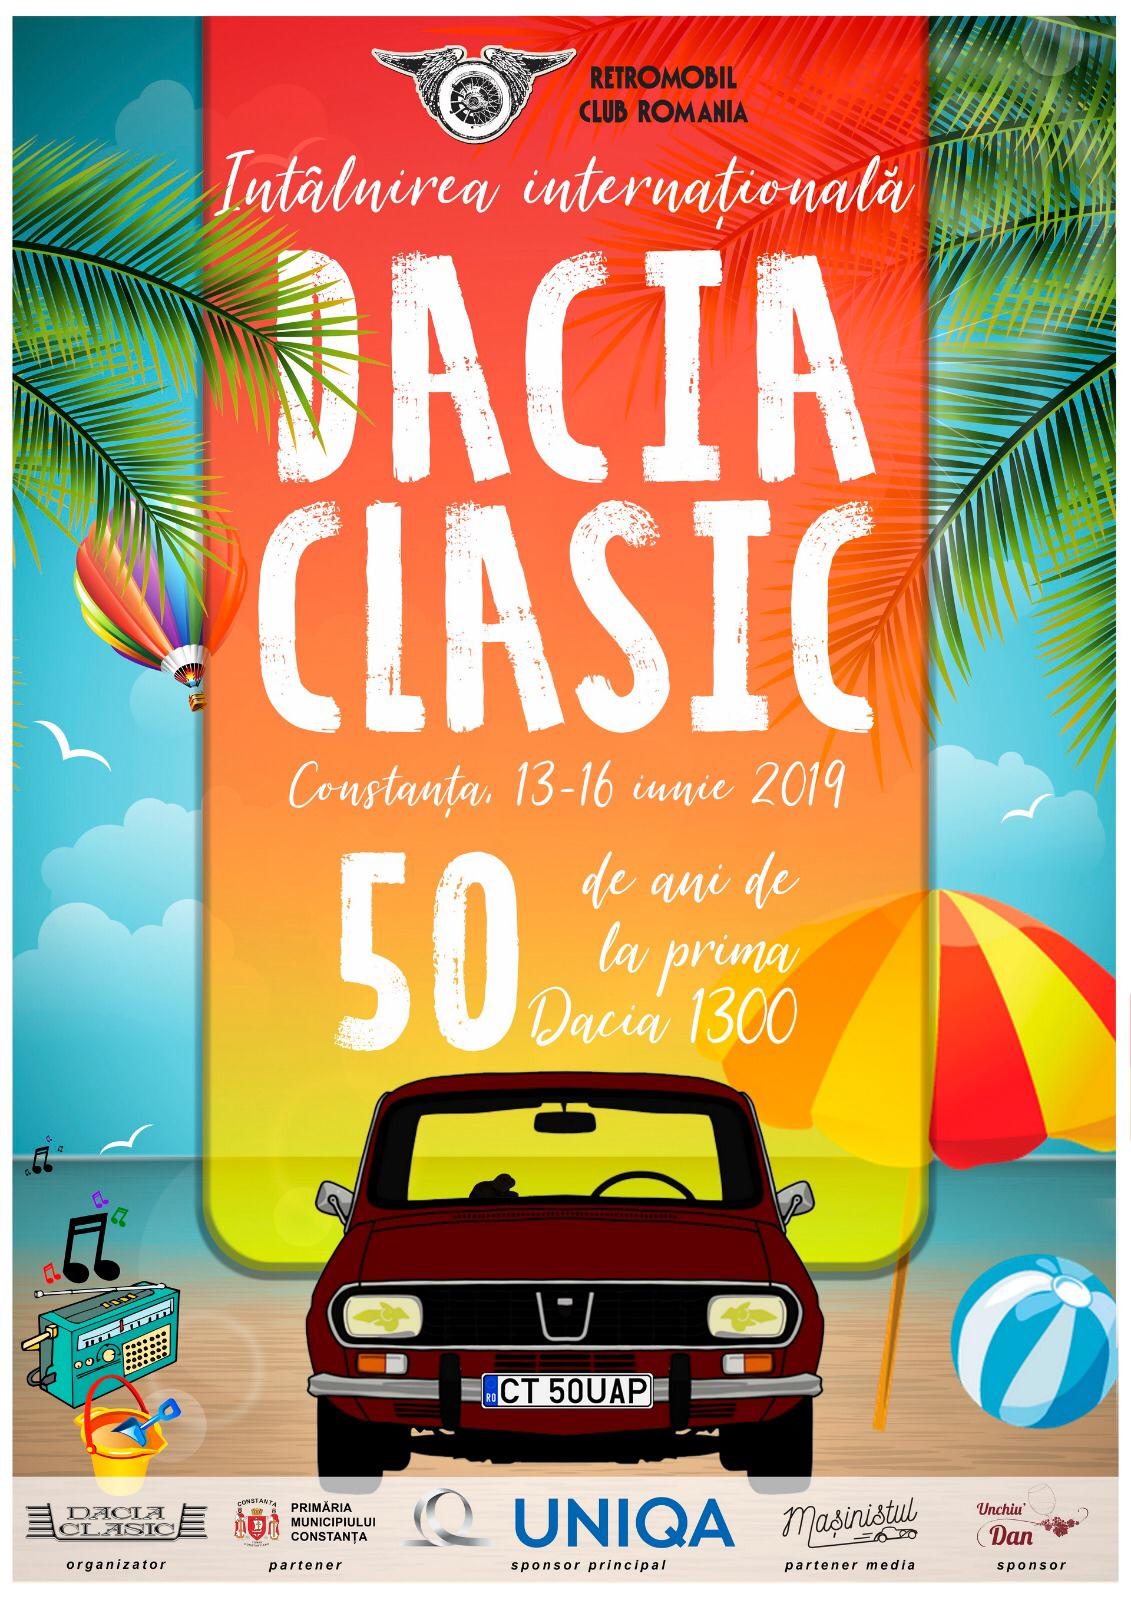 Intalnirea Internationala “Dacia Clasic” 2019